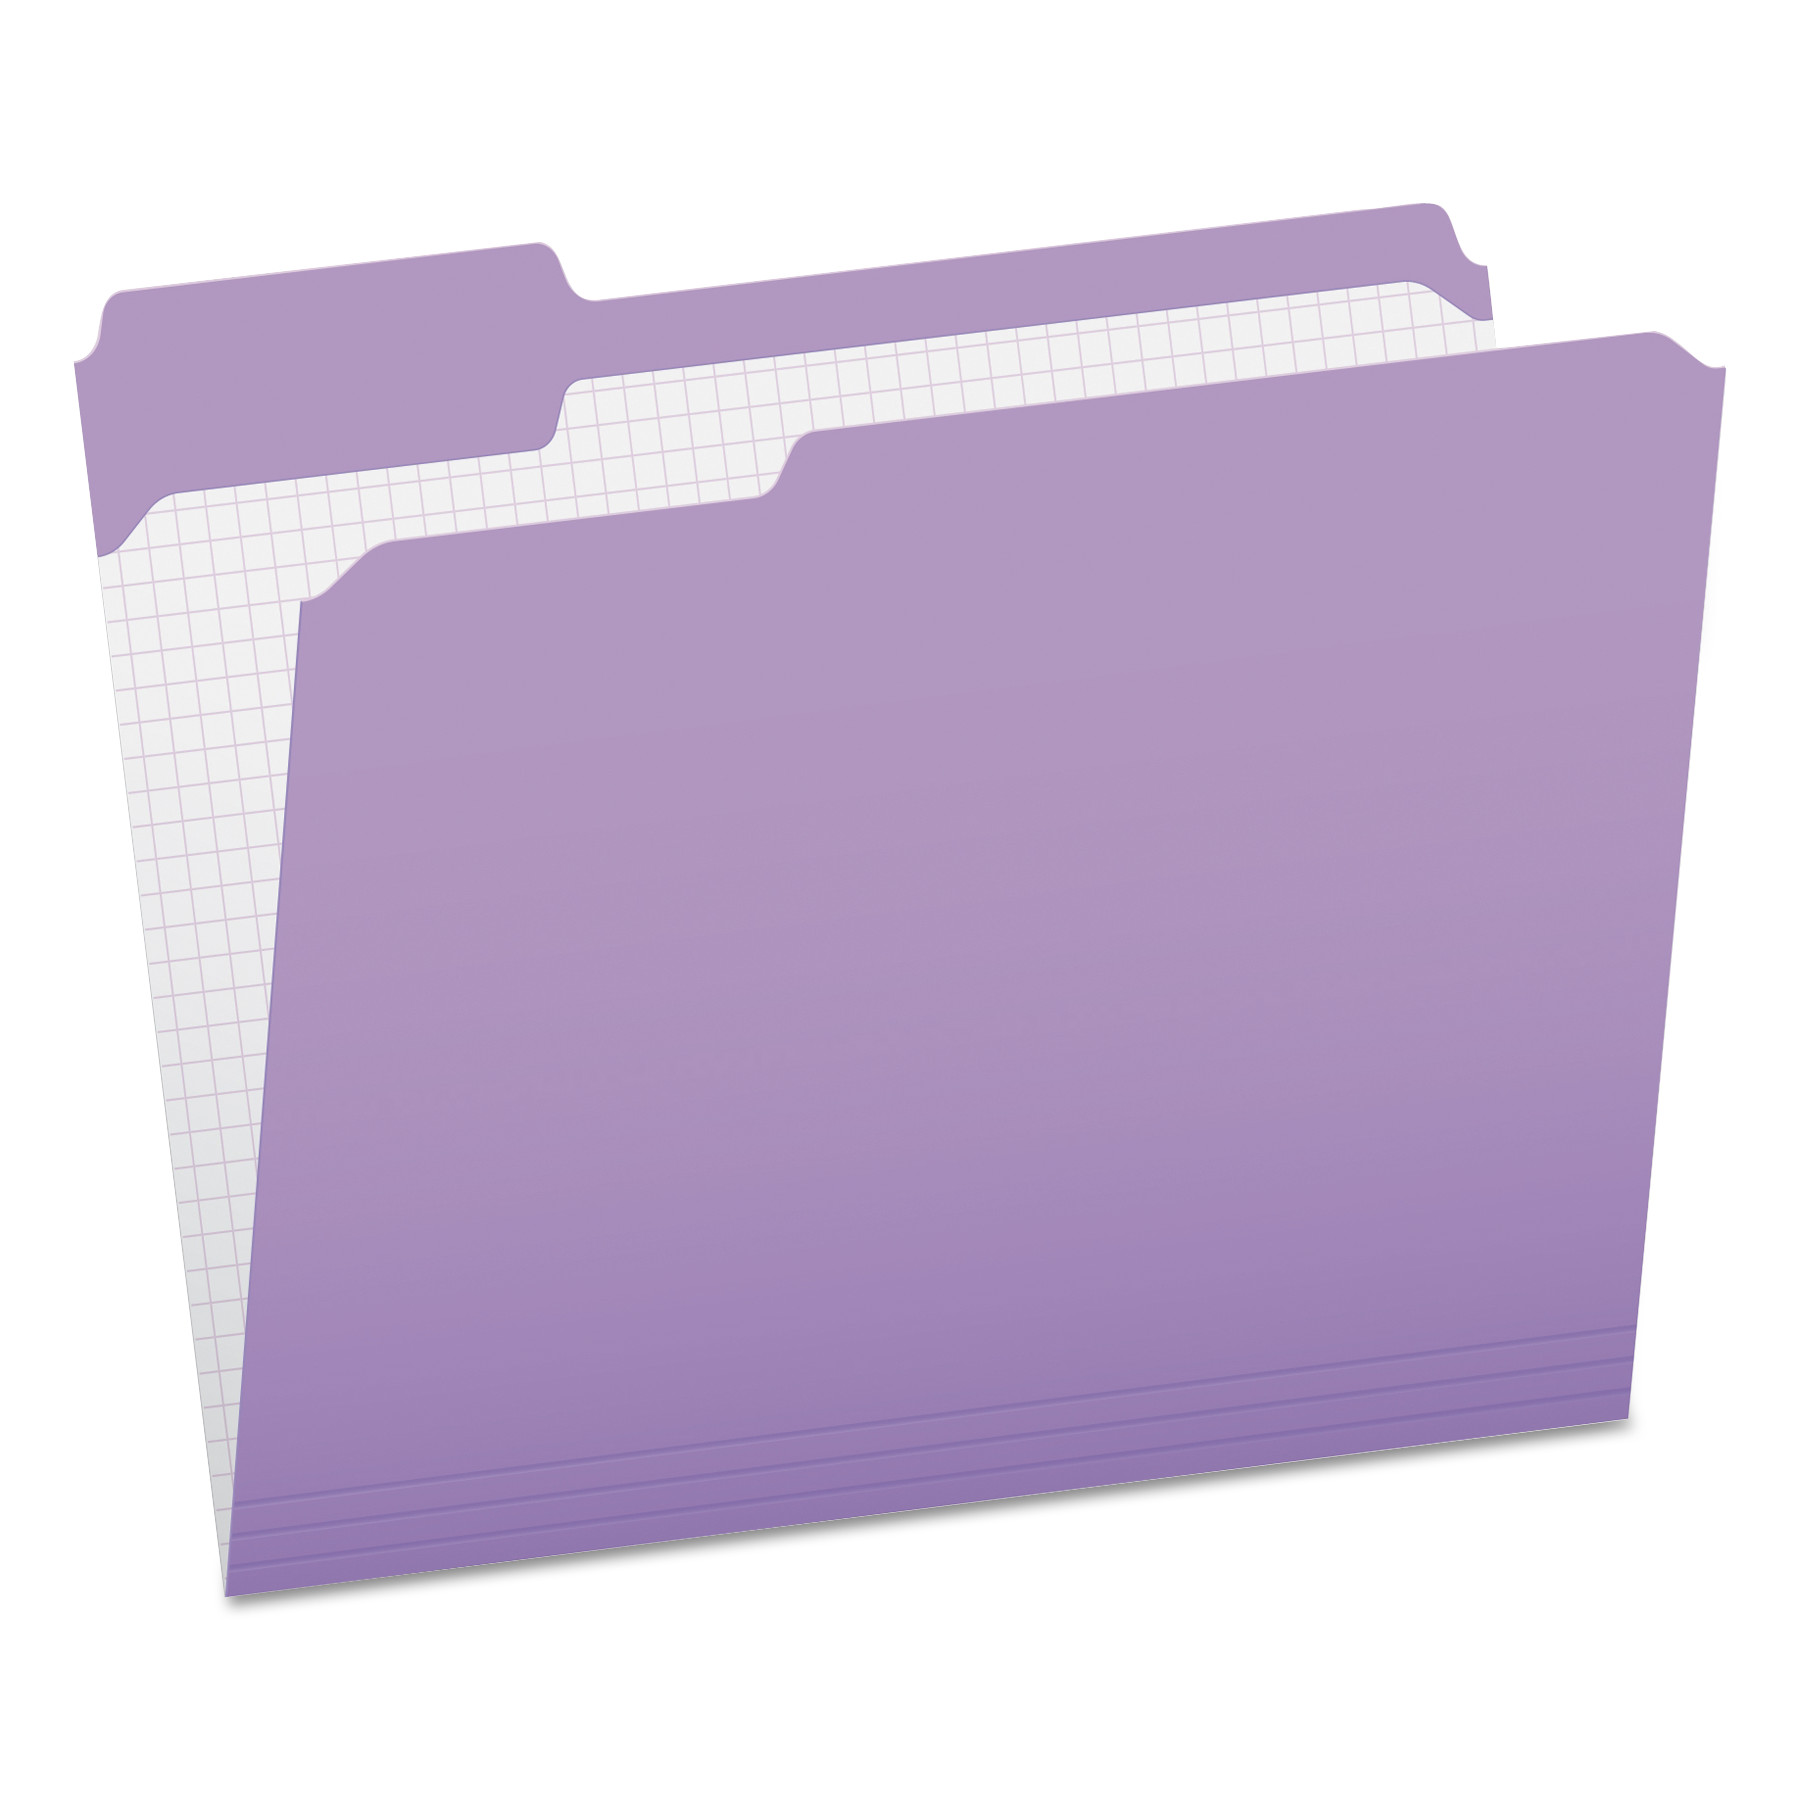  Pendaflex R152 1/3 LAV Double-Ply Reinforced Top Tab Colored File Folders, 1/3-Cut Tabs, Letter Size, Lavender, 100/Box (PFXR15213LAV) 